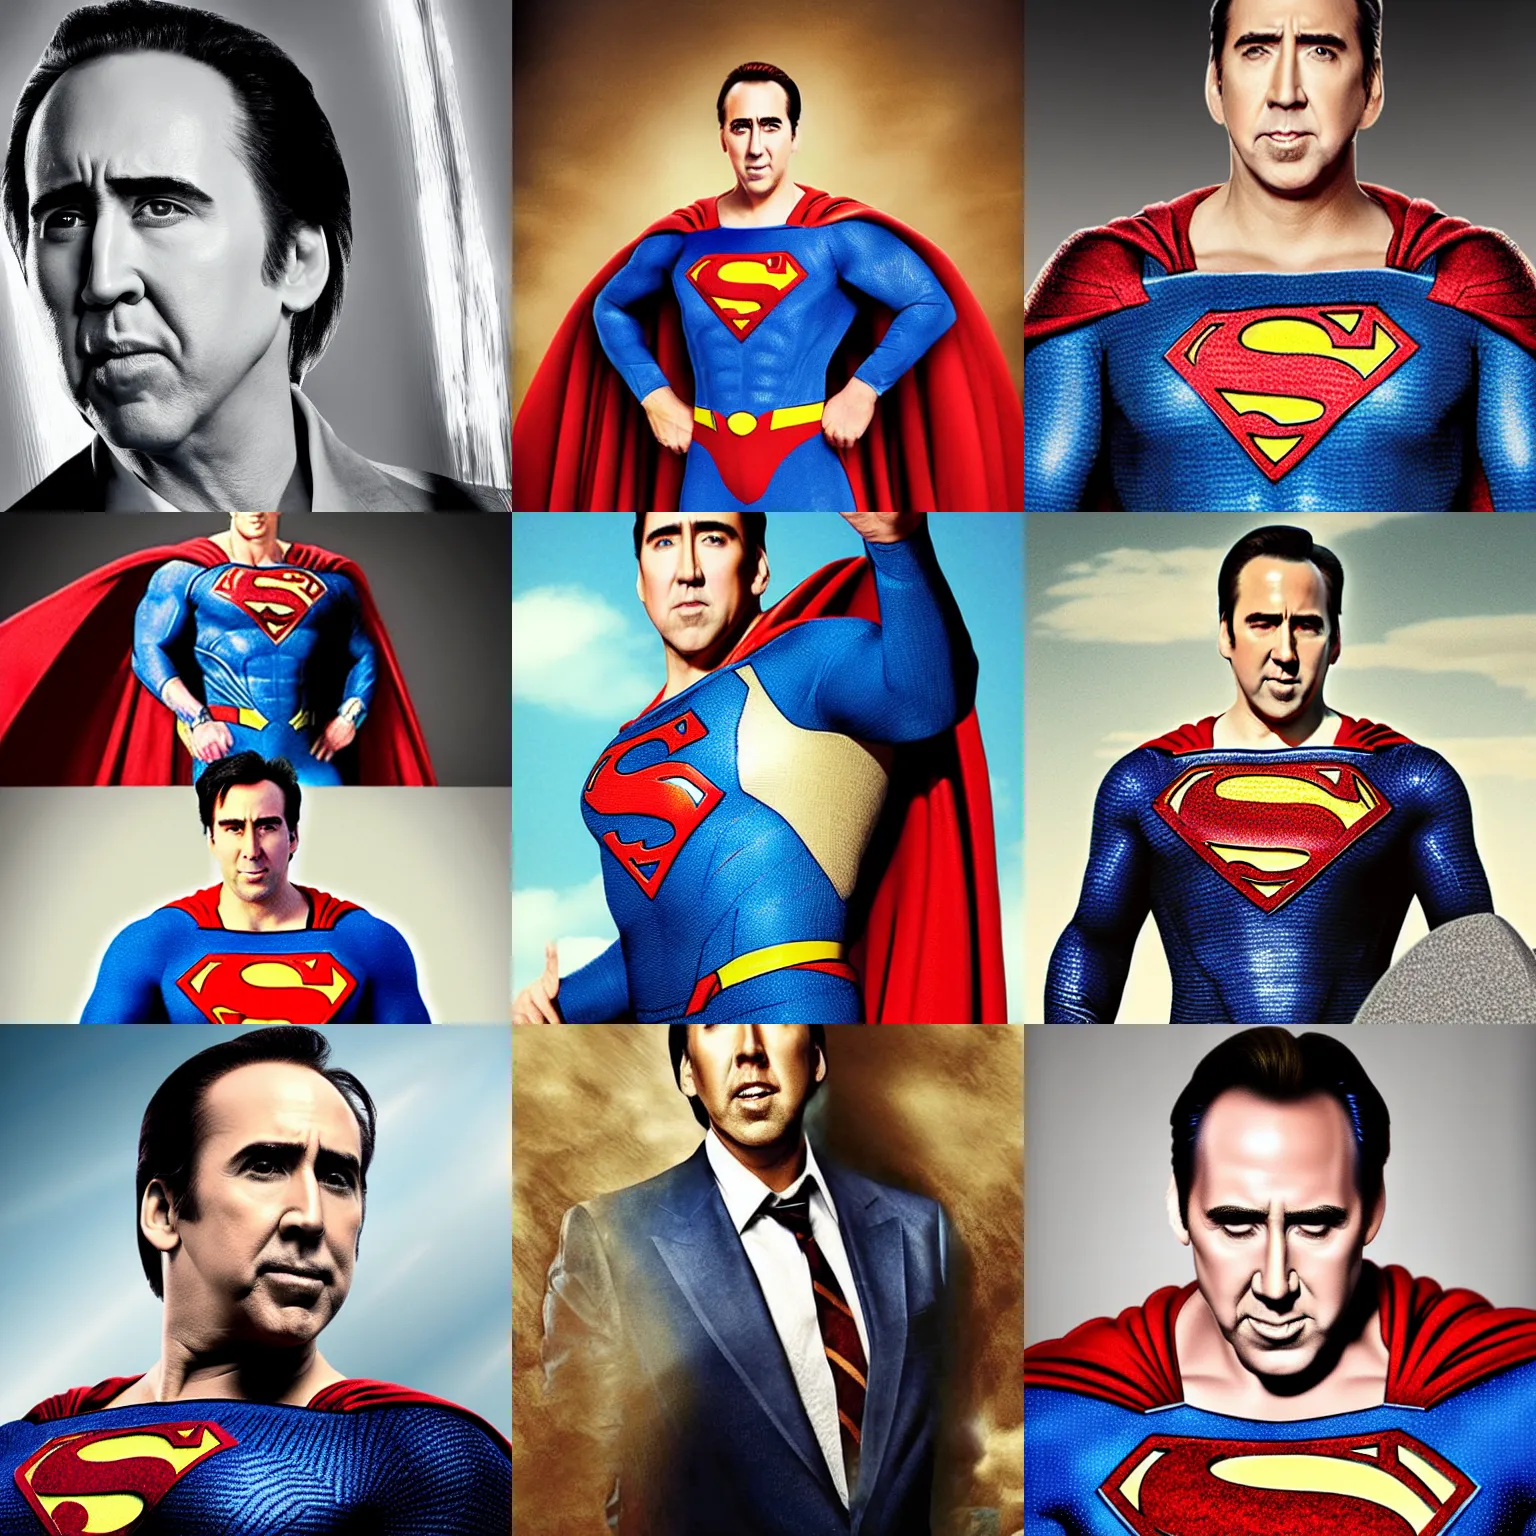 Prompt: Nicholas Cage is superman, portrait, photograph for movie marketing